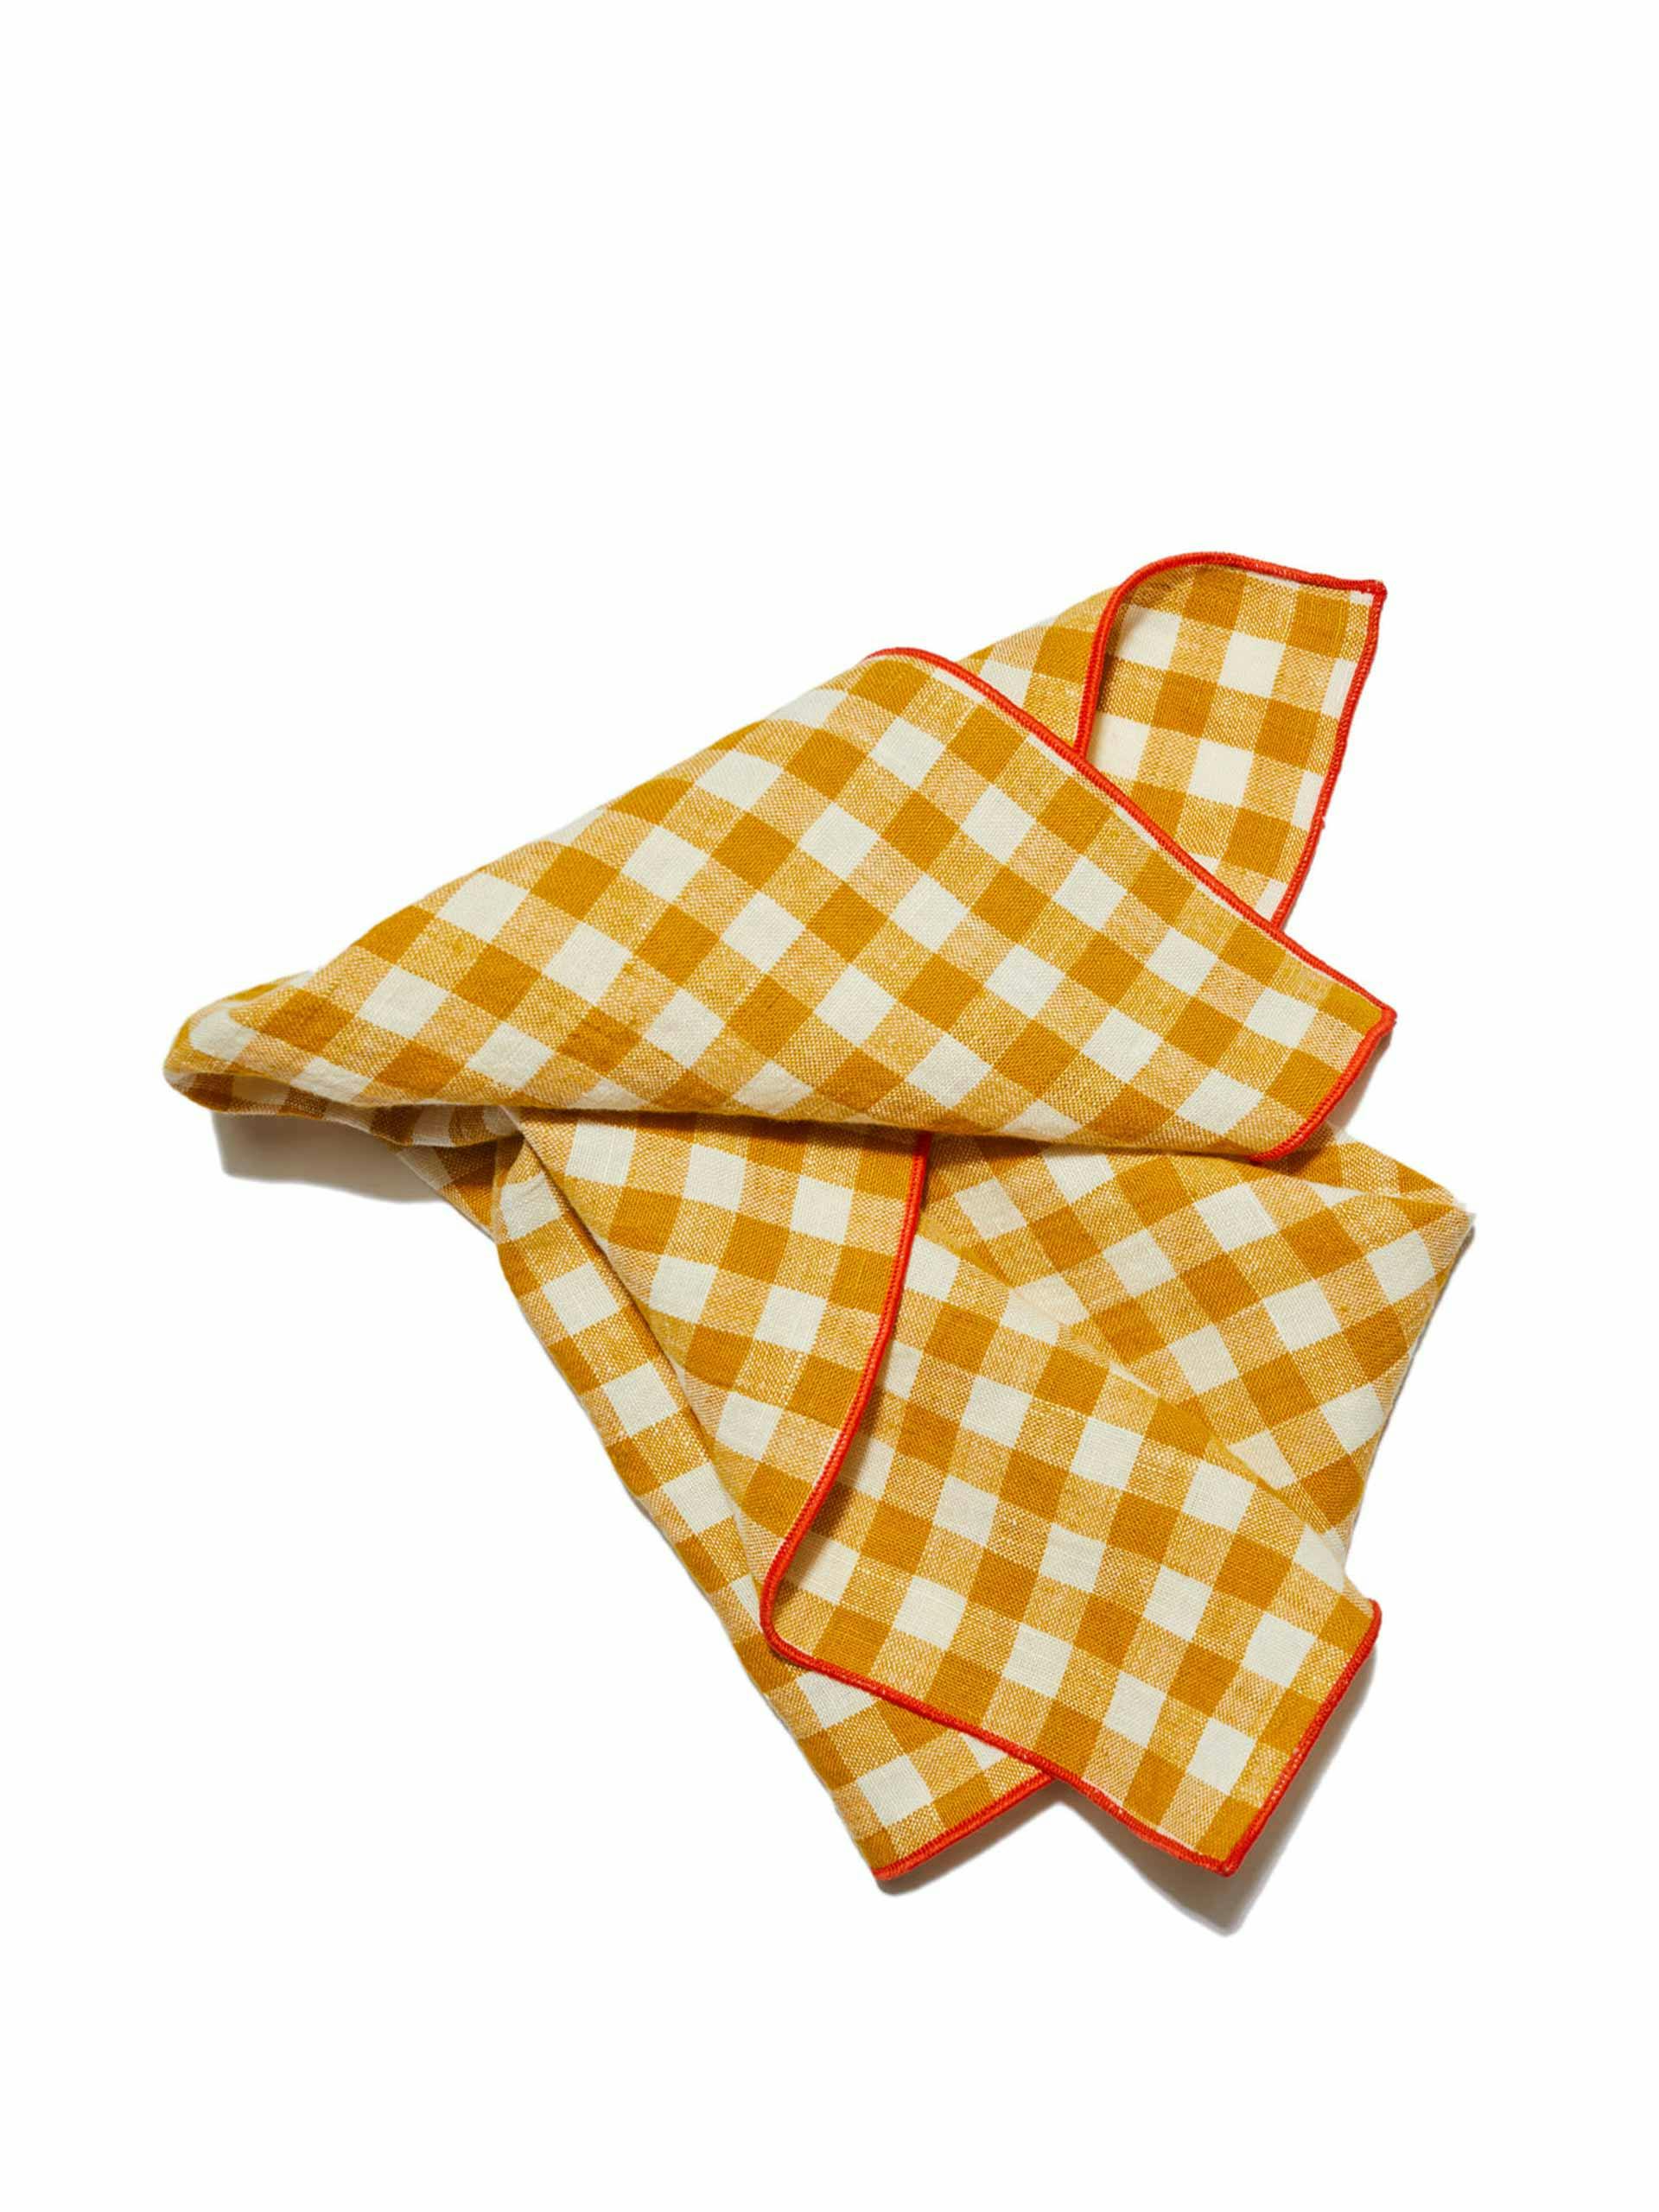 Picnic collection napkins (set of 4)